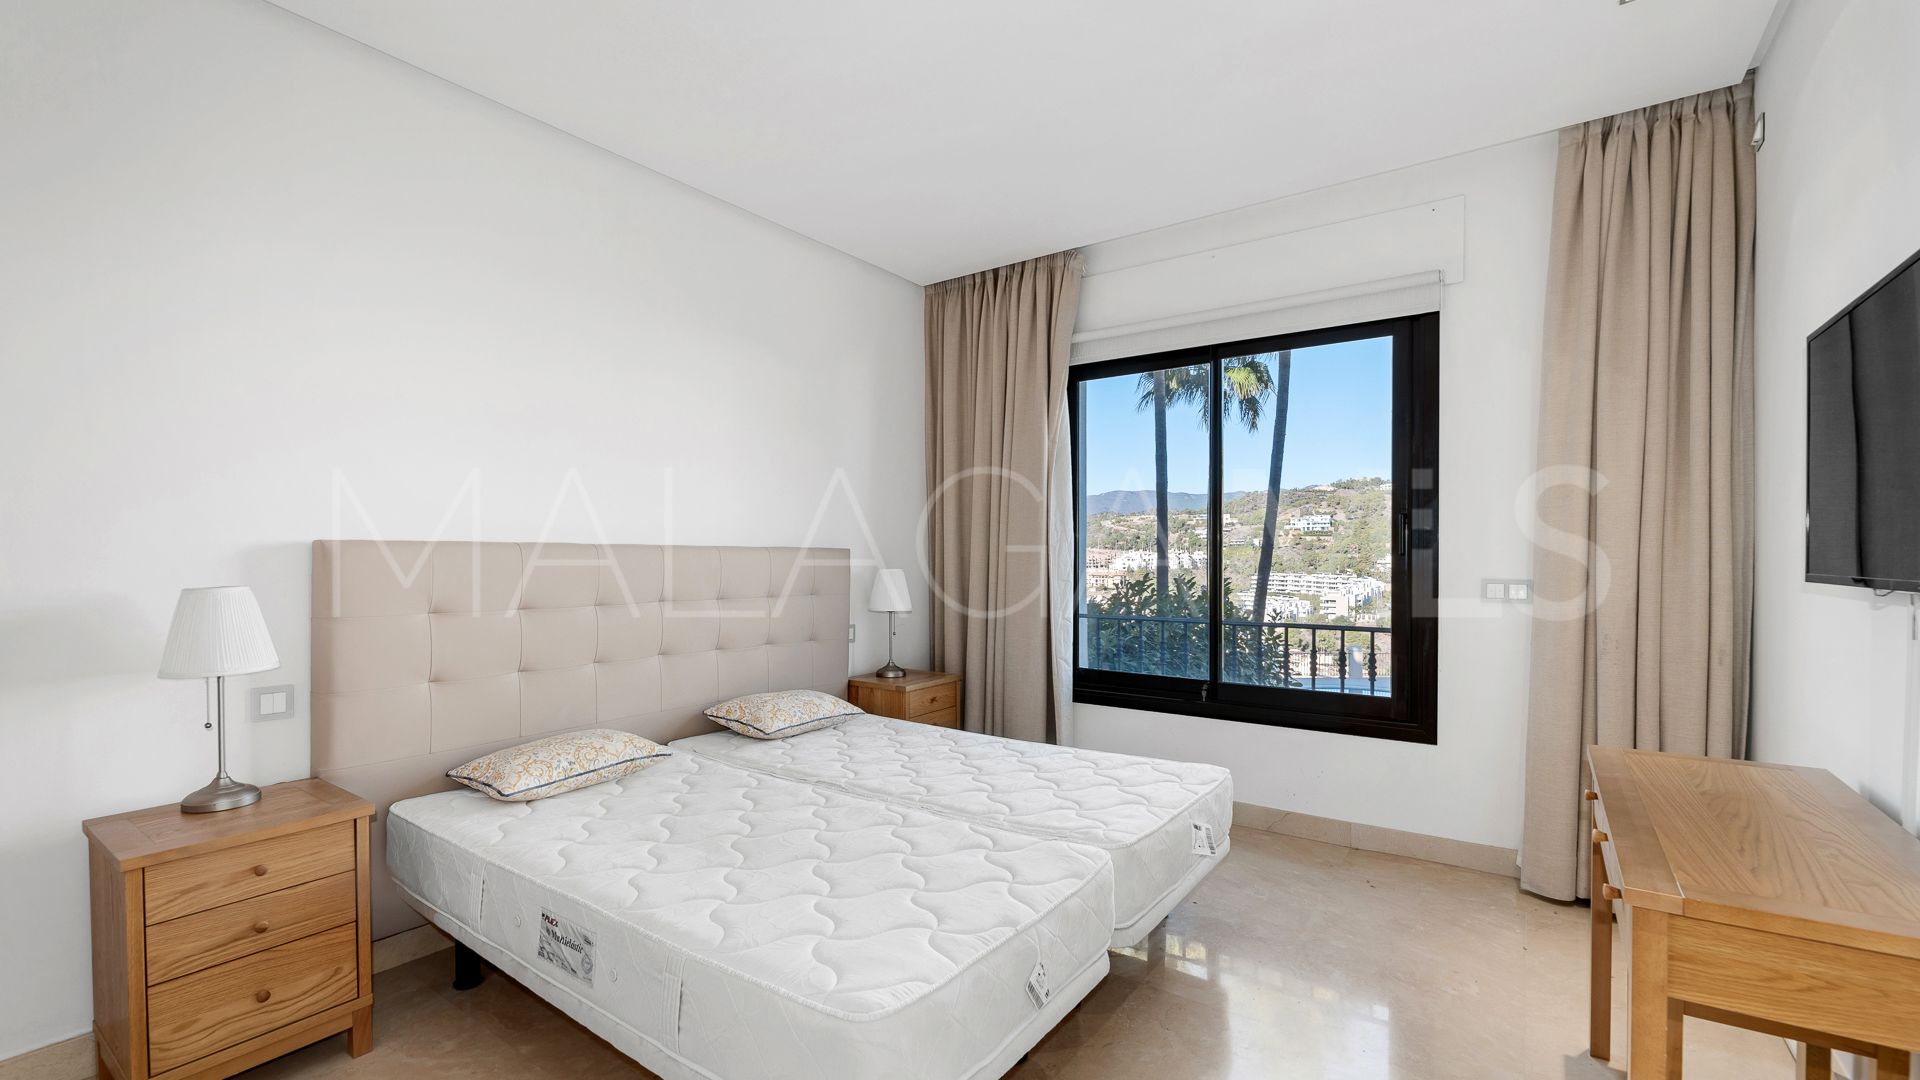 2 bedrooms apartment in La Quinta for sale